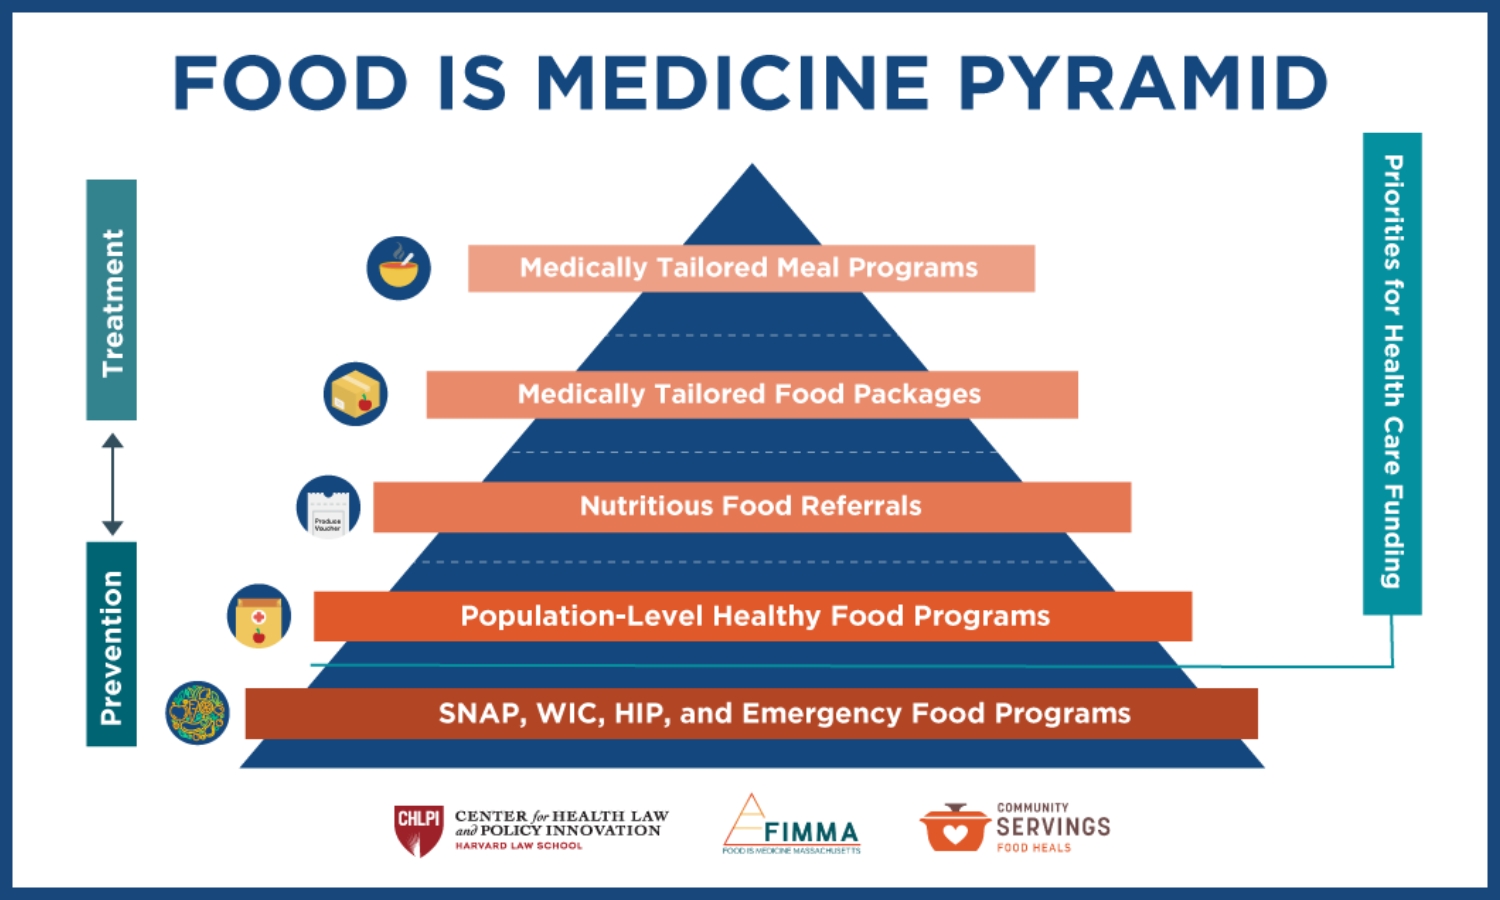 Food is medicine pyramid